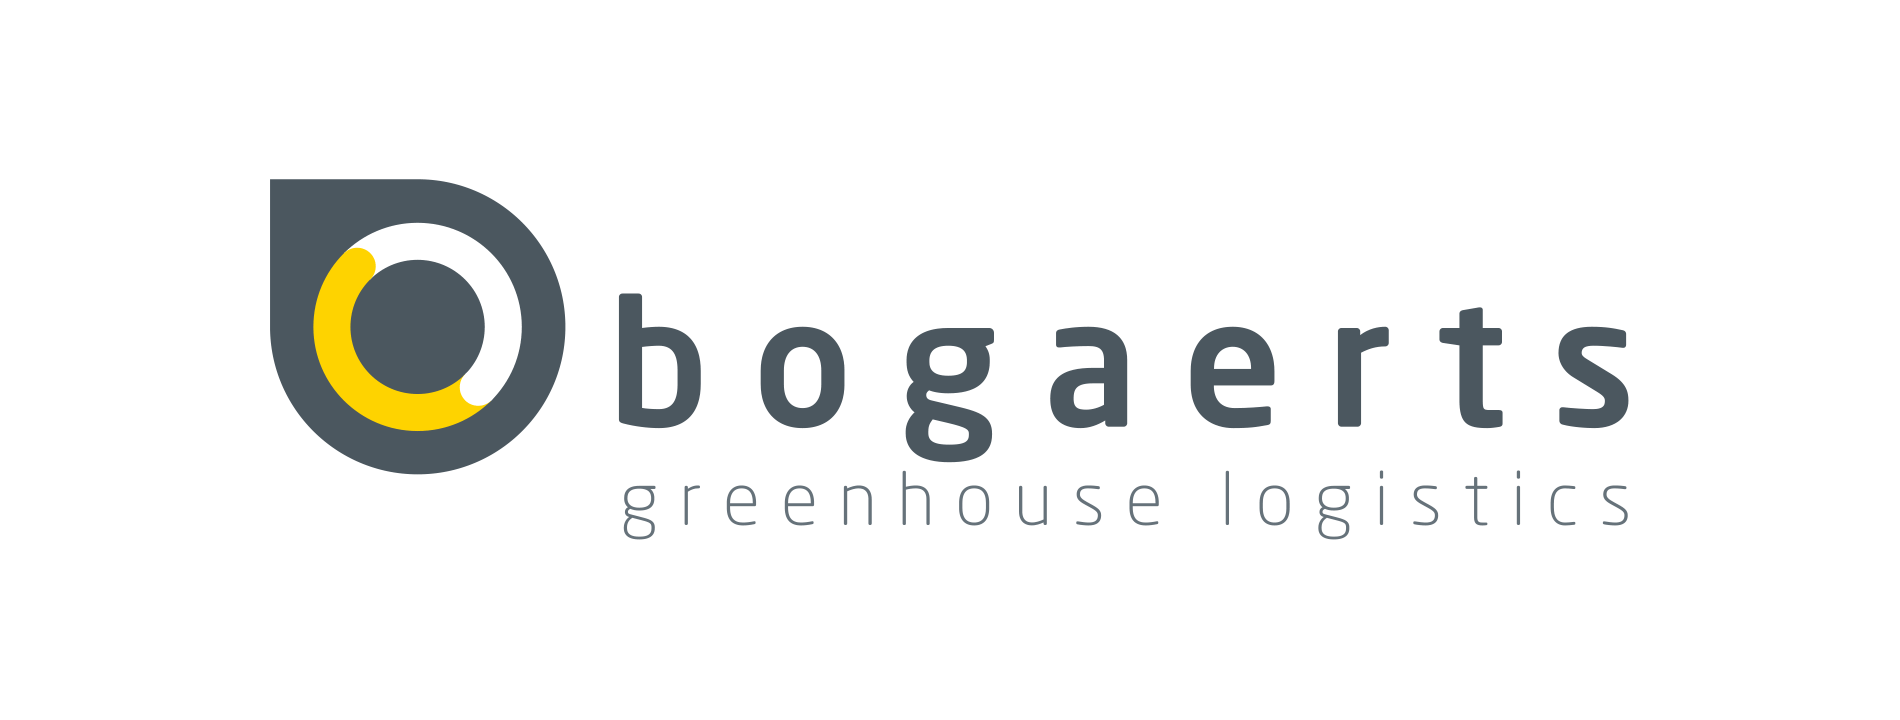 Bogaerts Greenhouse Logistics - quality growers use quality tools